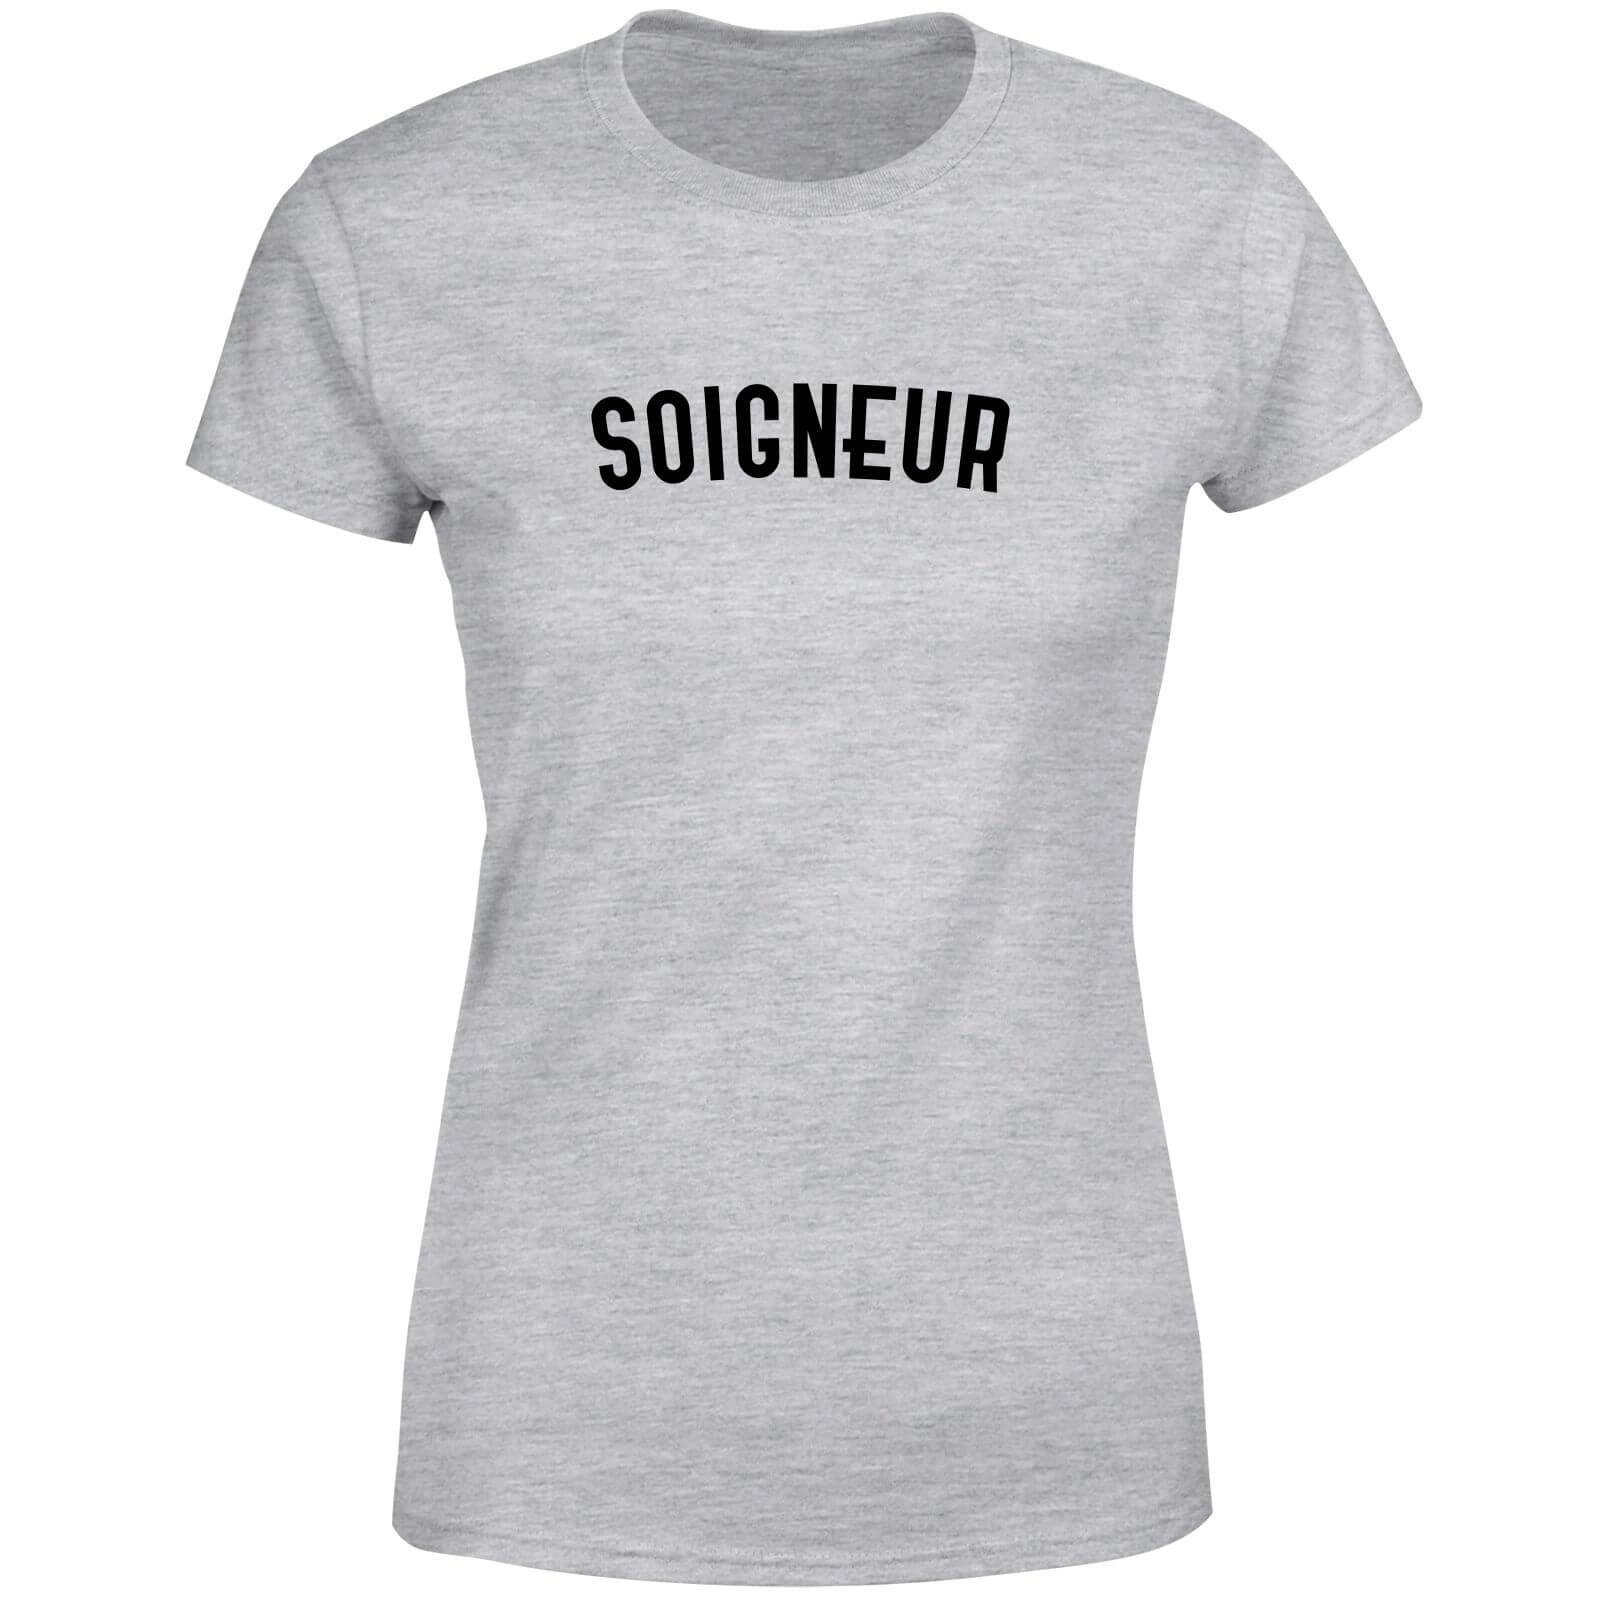 Soigneur Women's T-Shirt - Grey - XS - Grey